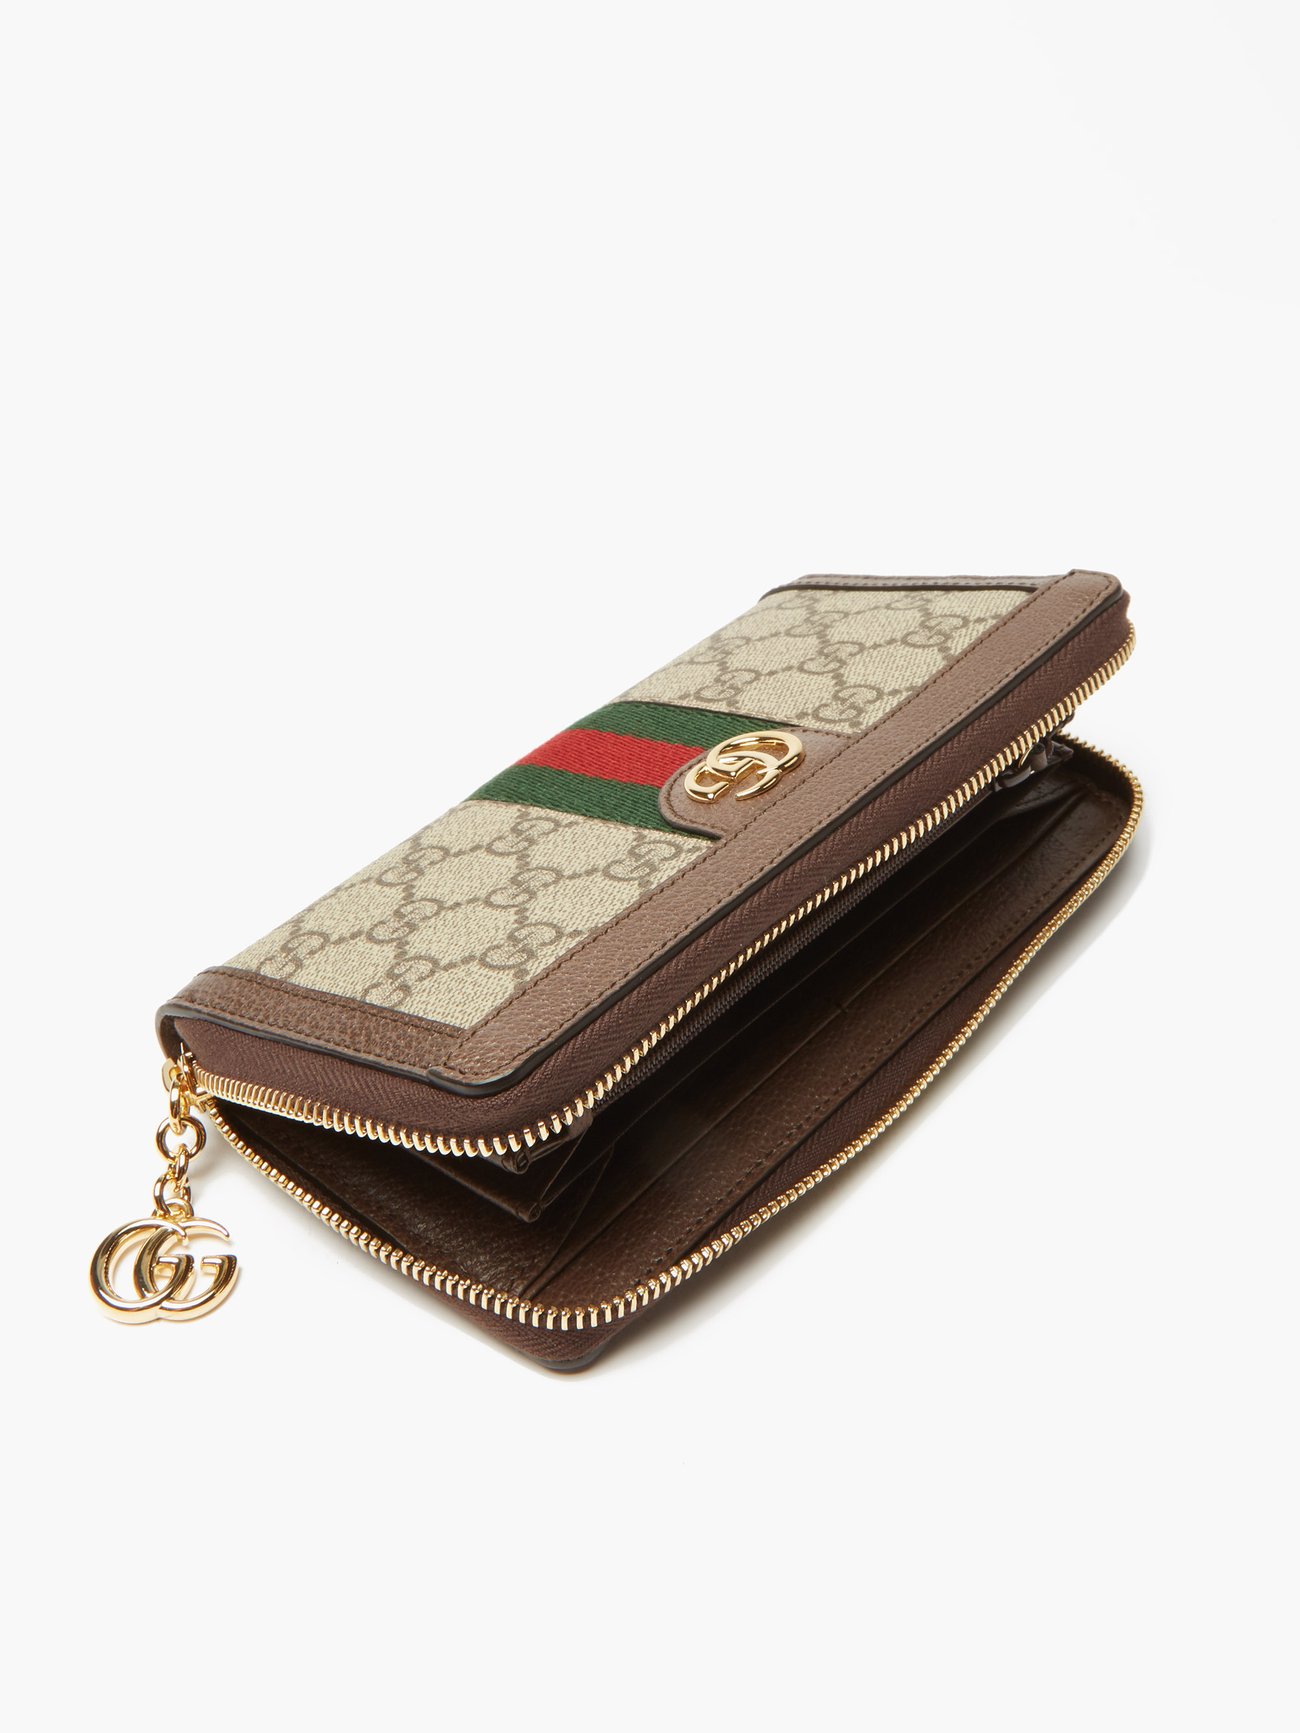 Gucci Beige Ophidia GG Supreme Zip Around Long Wallet